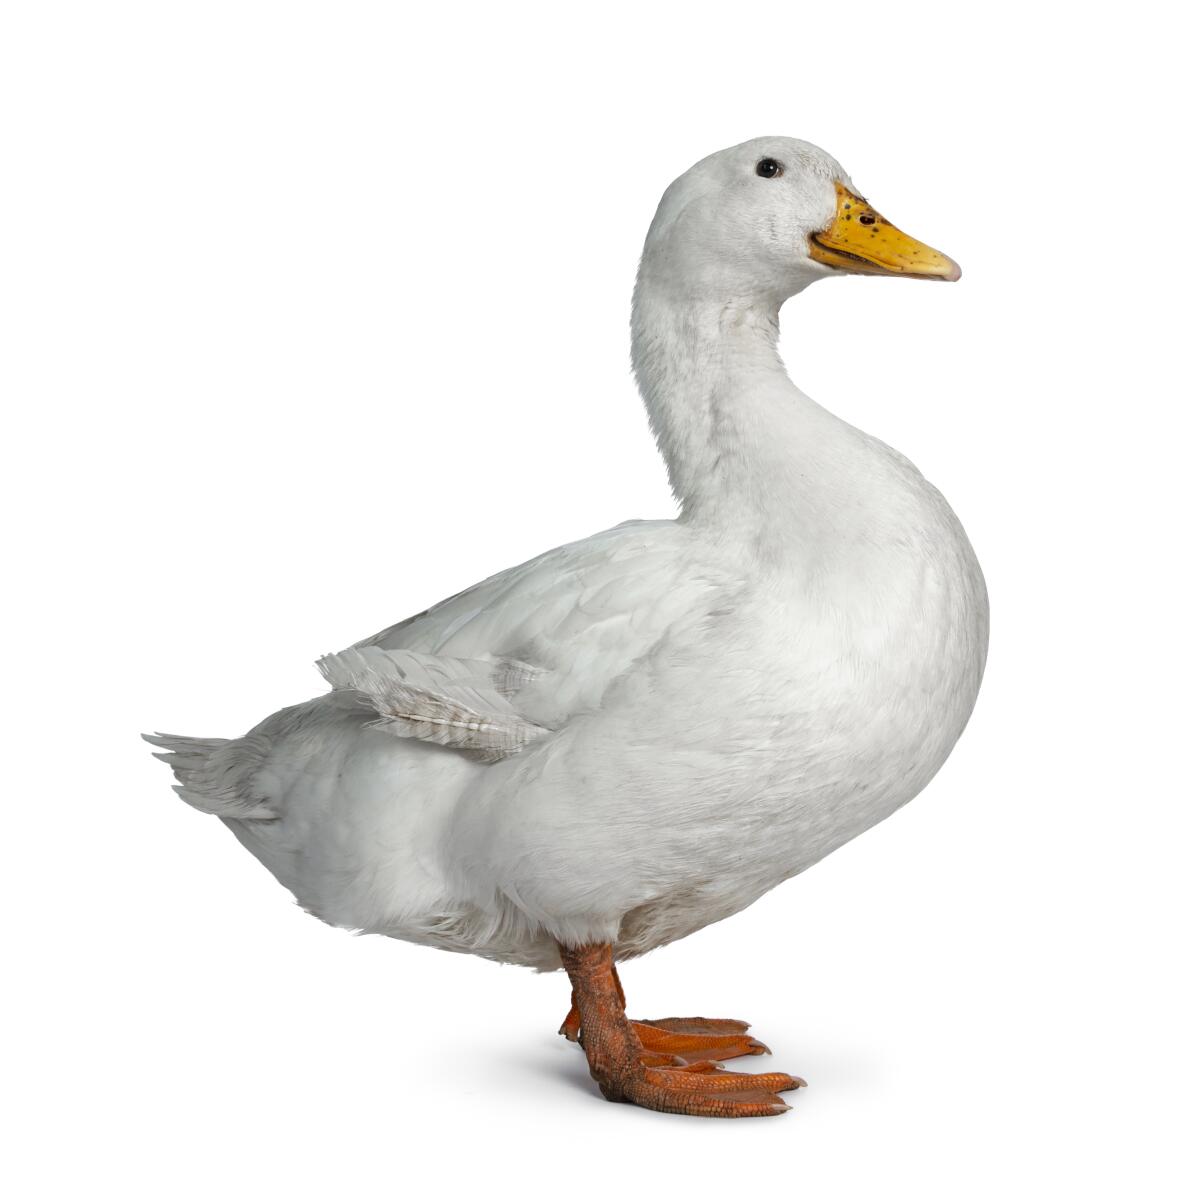 Domesticated white duck